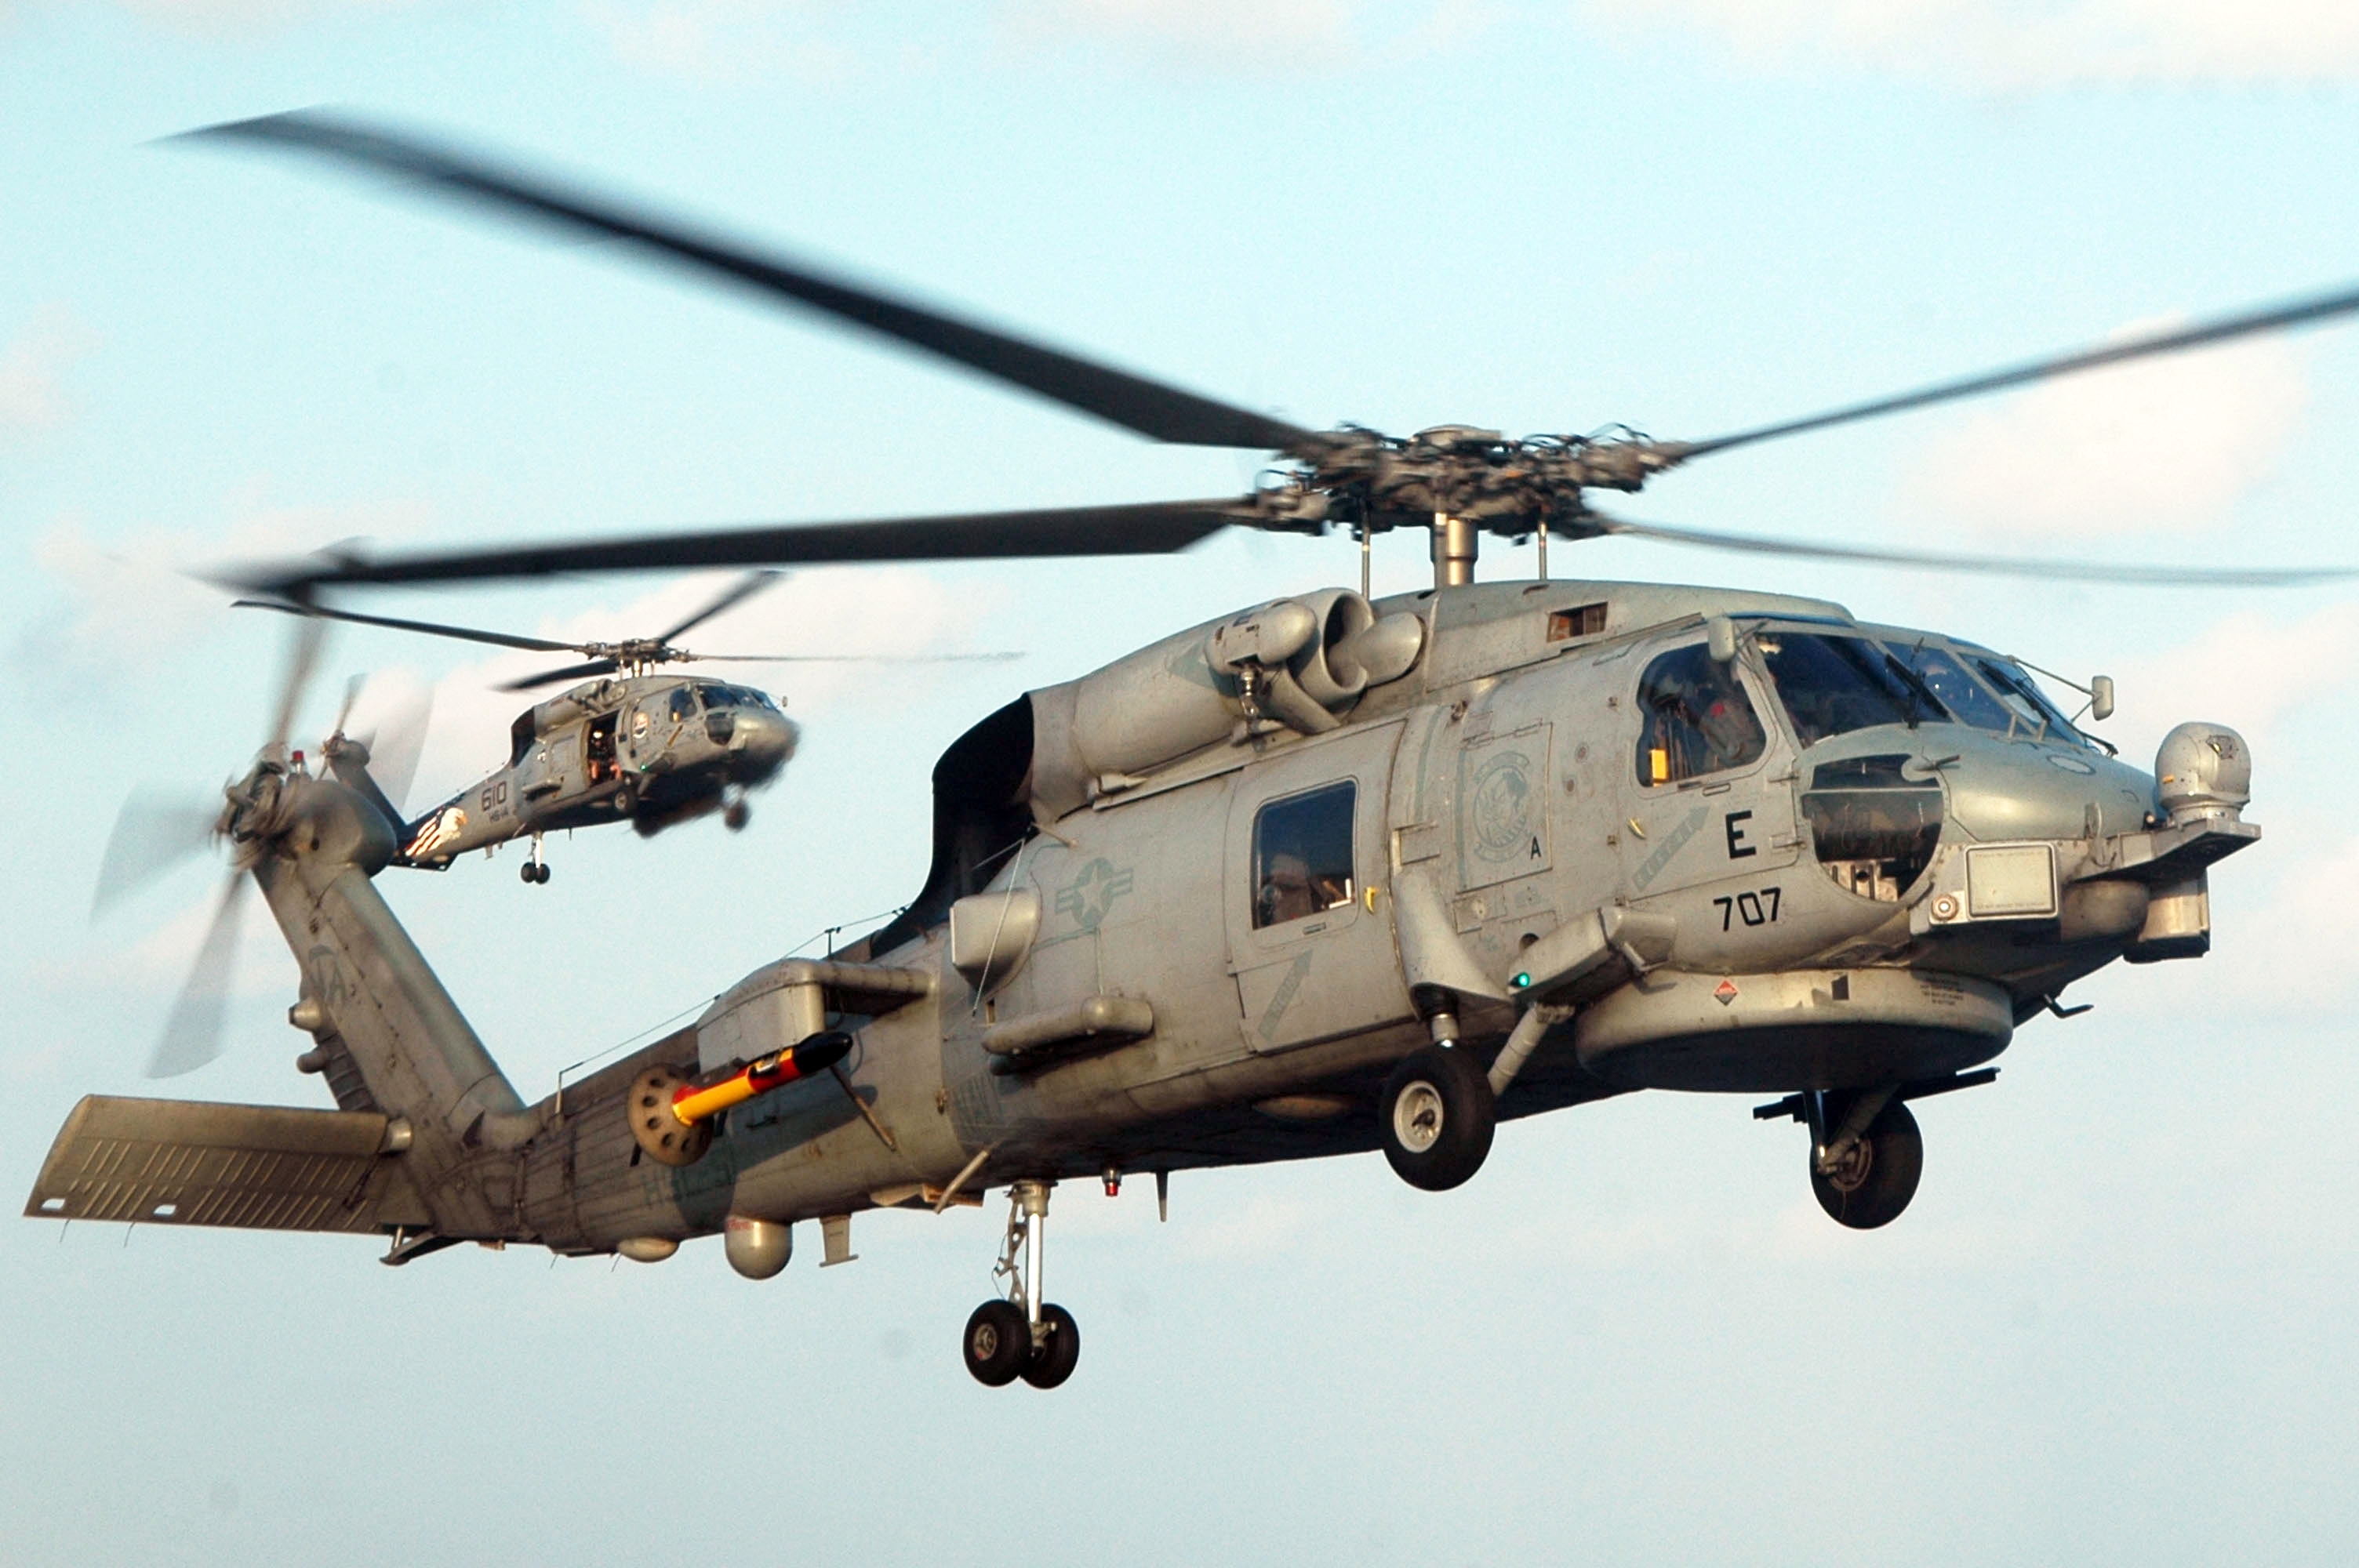 File:SH-60B Seahawk.jpg - Wikipedia, the free encyclopedia